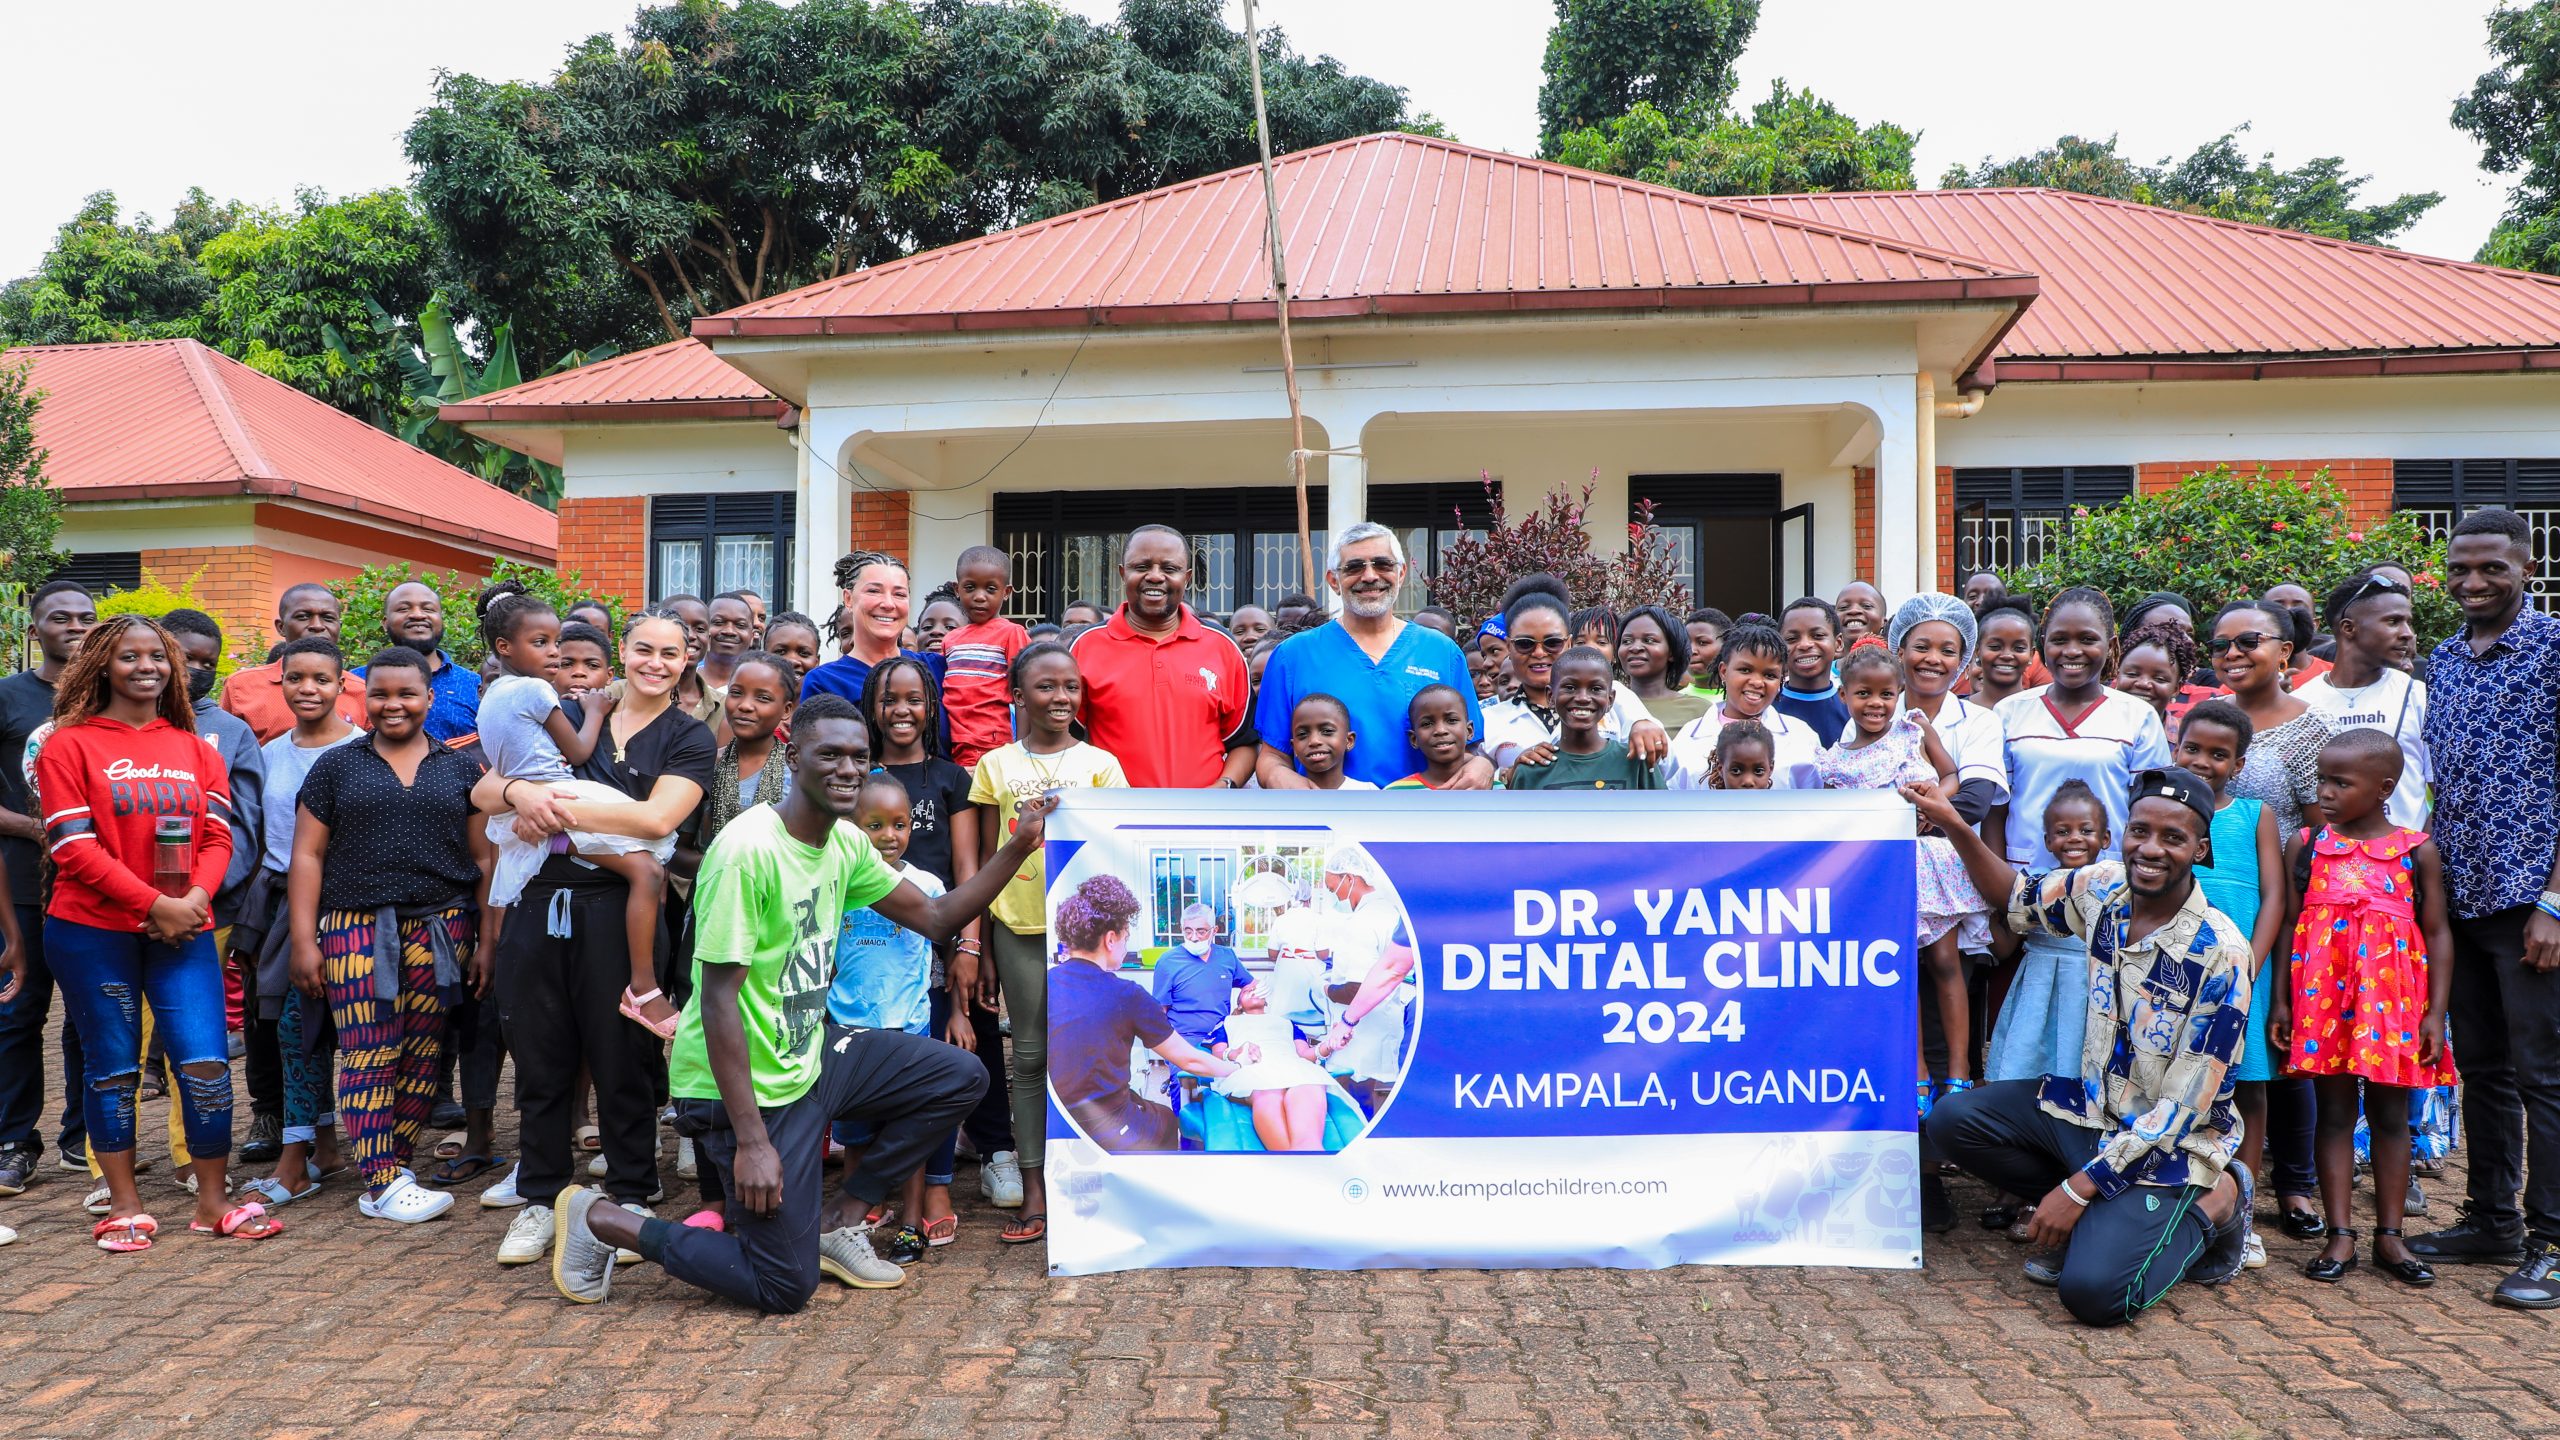 Bright Smiles at Kampala Children Centre